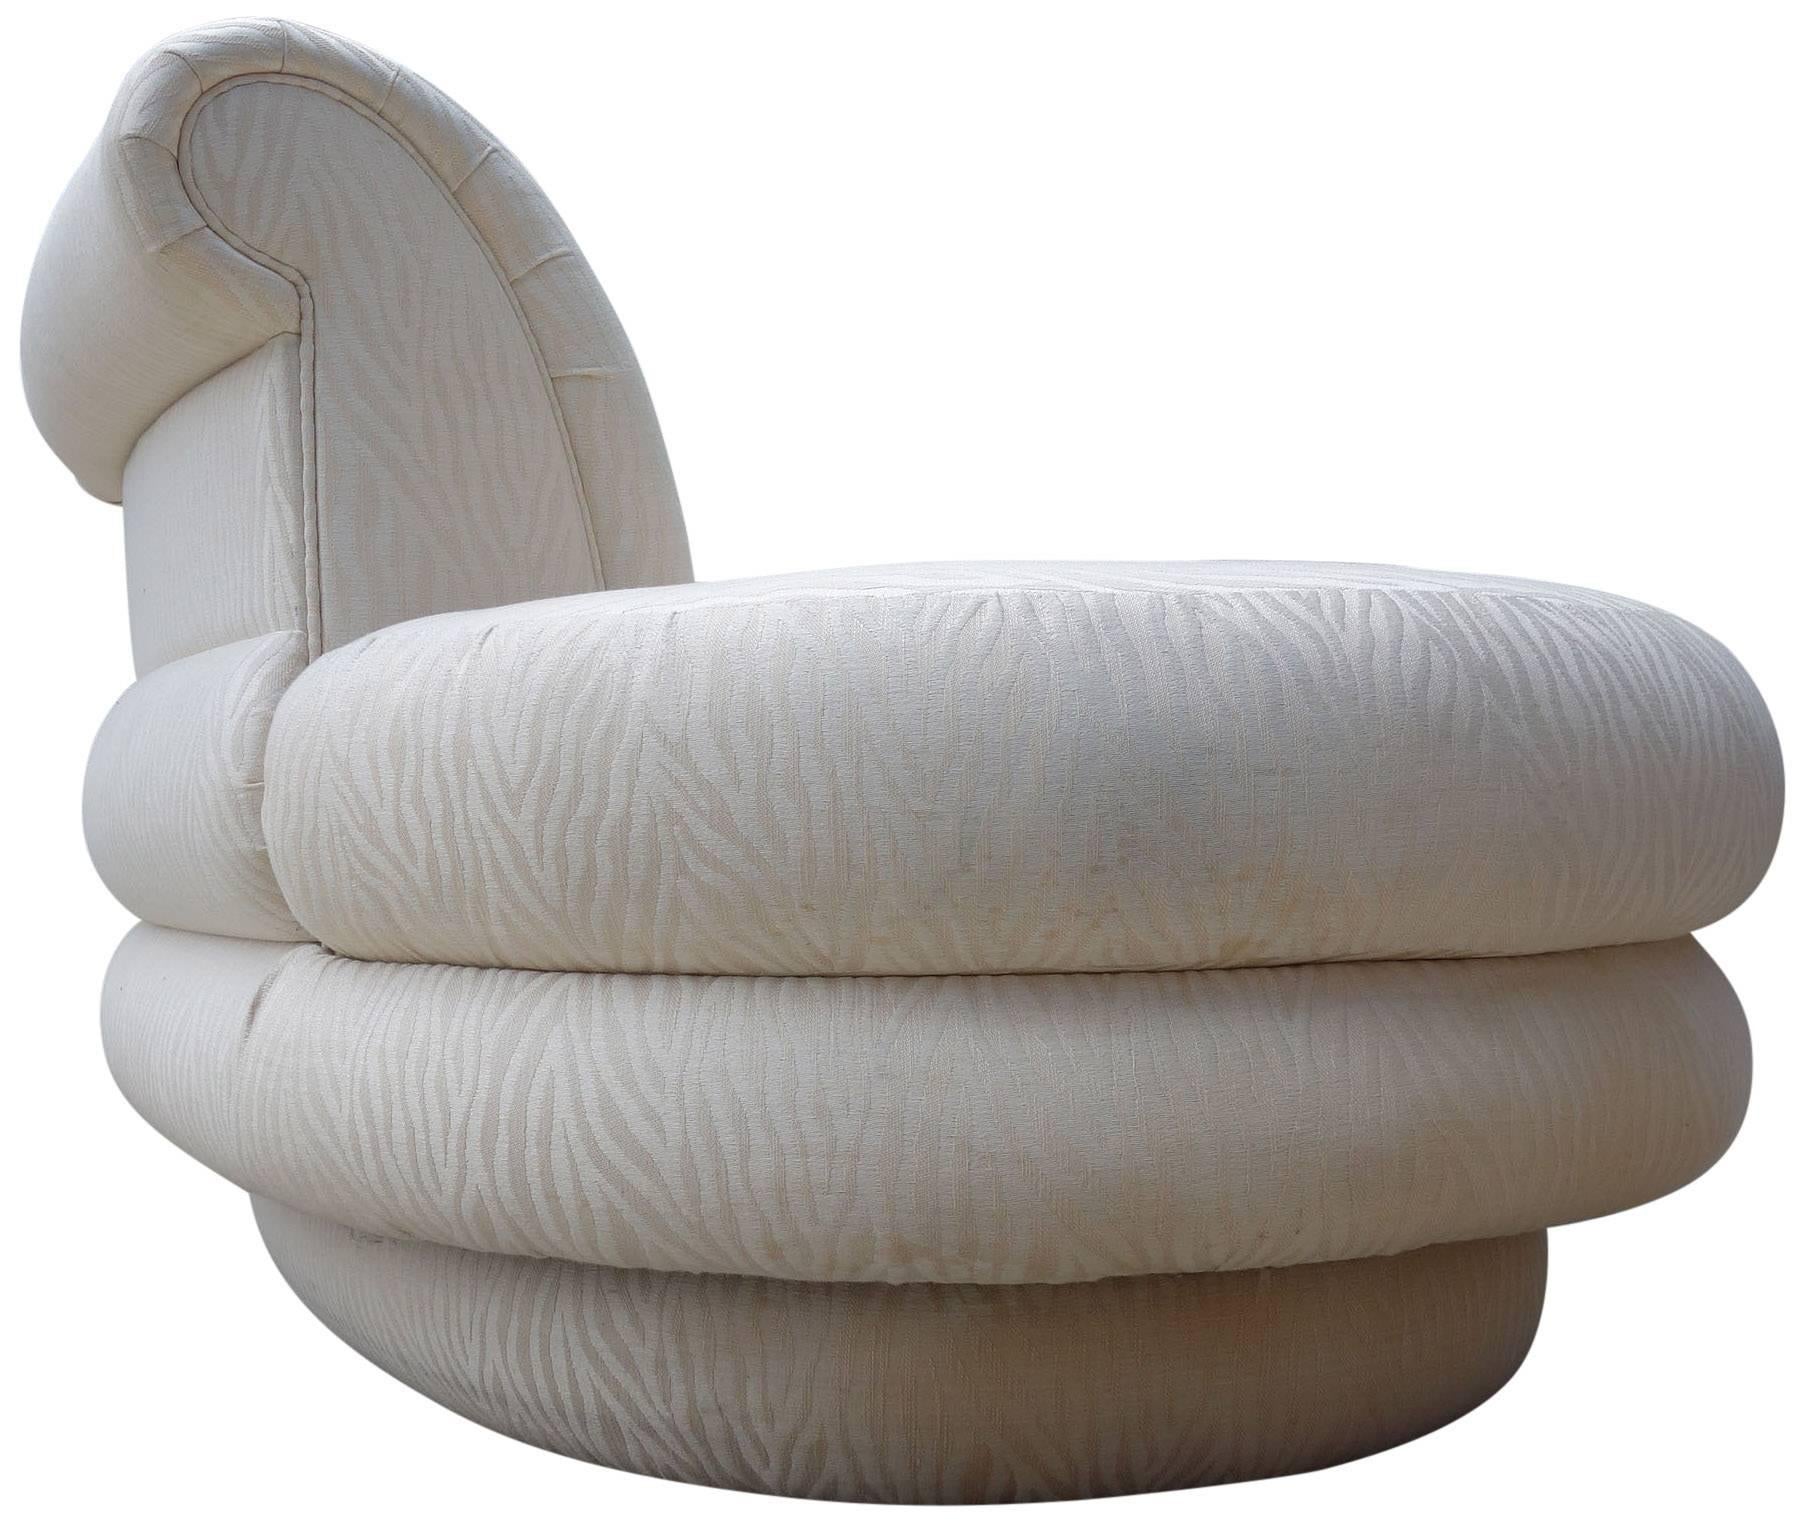 kidney shaped sofas